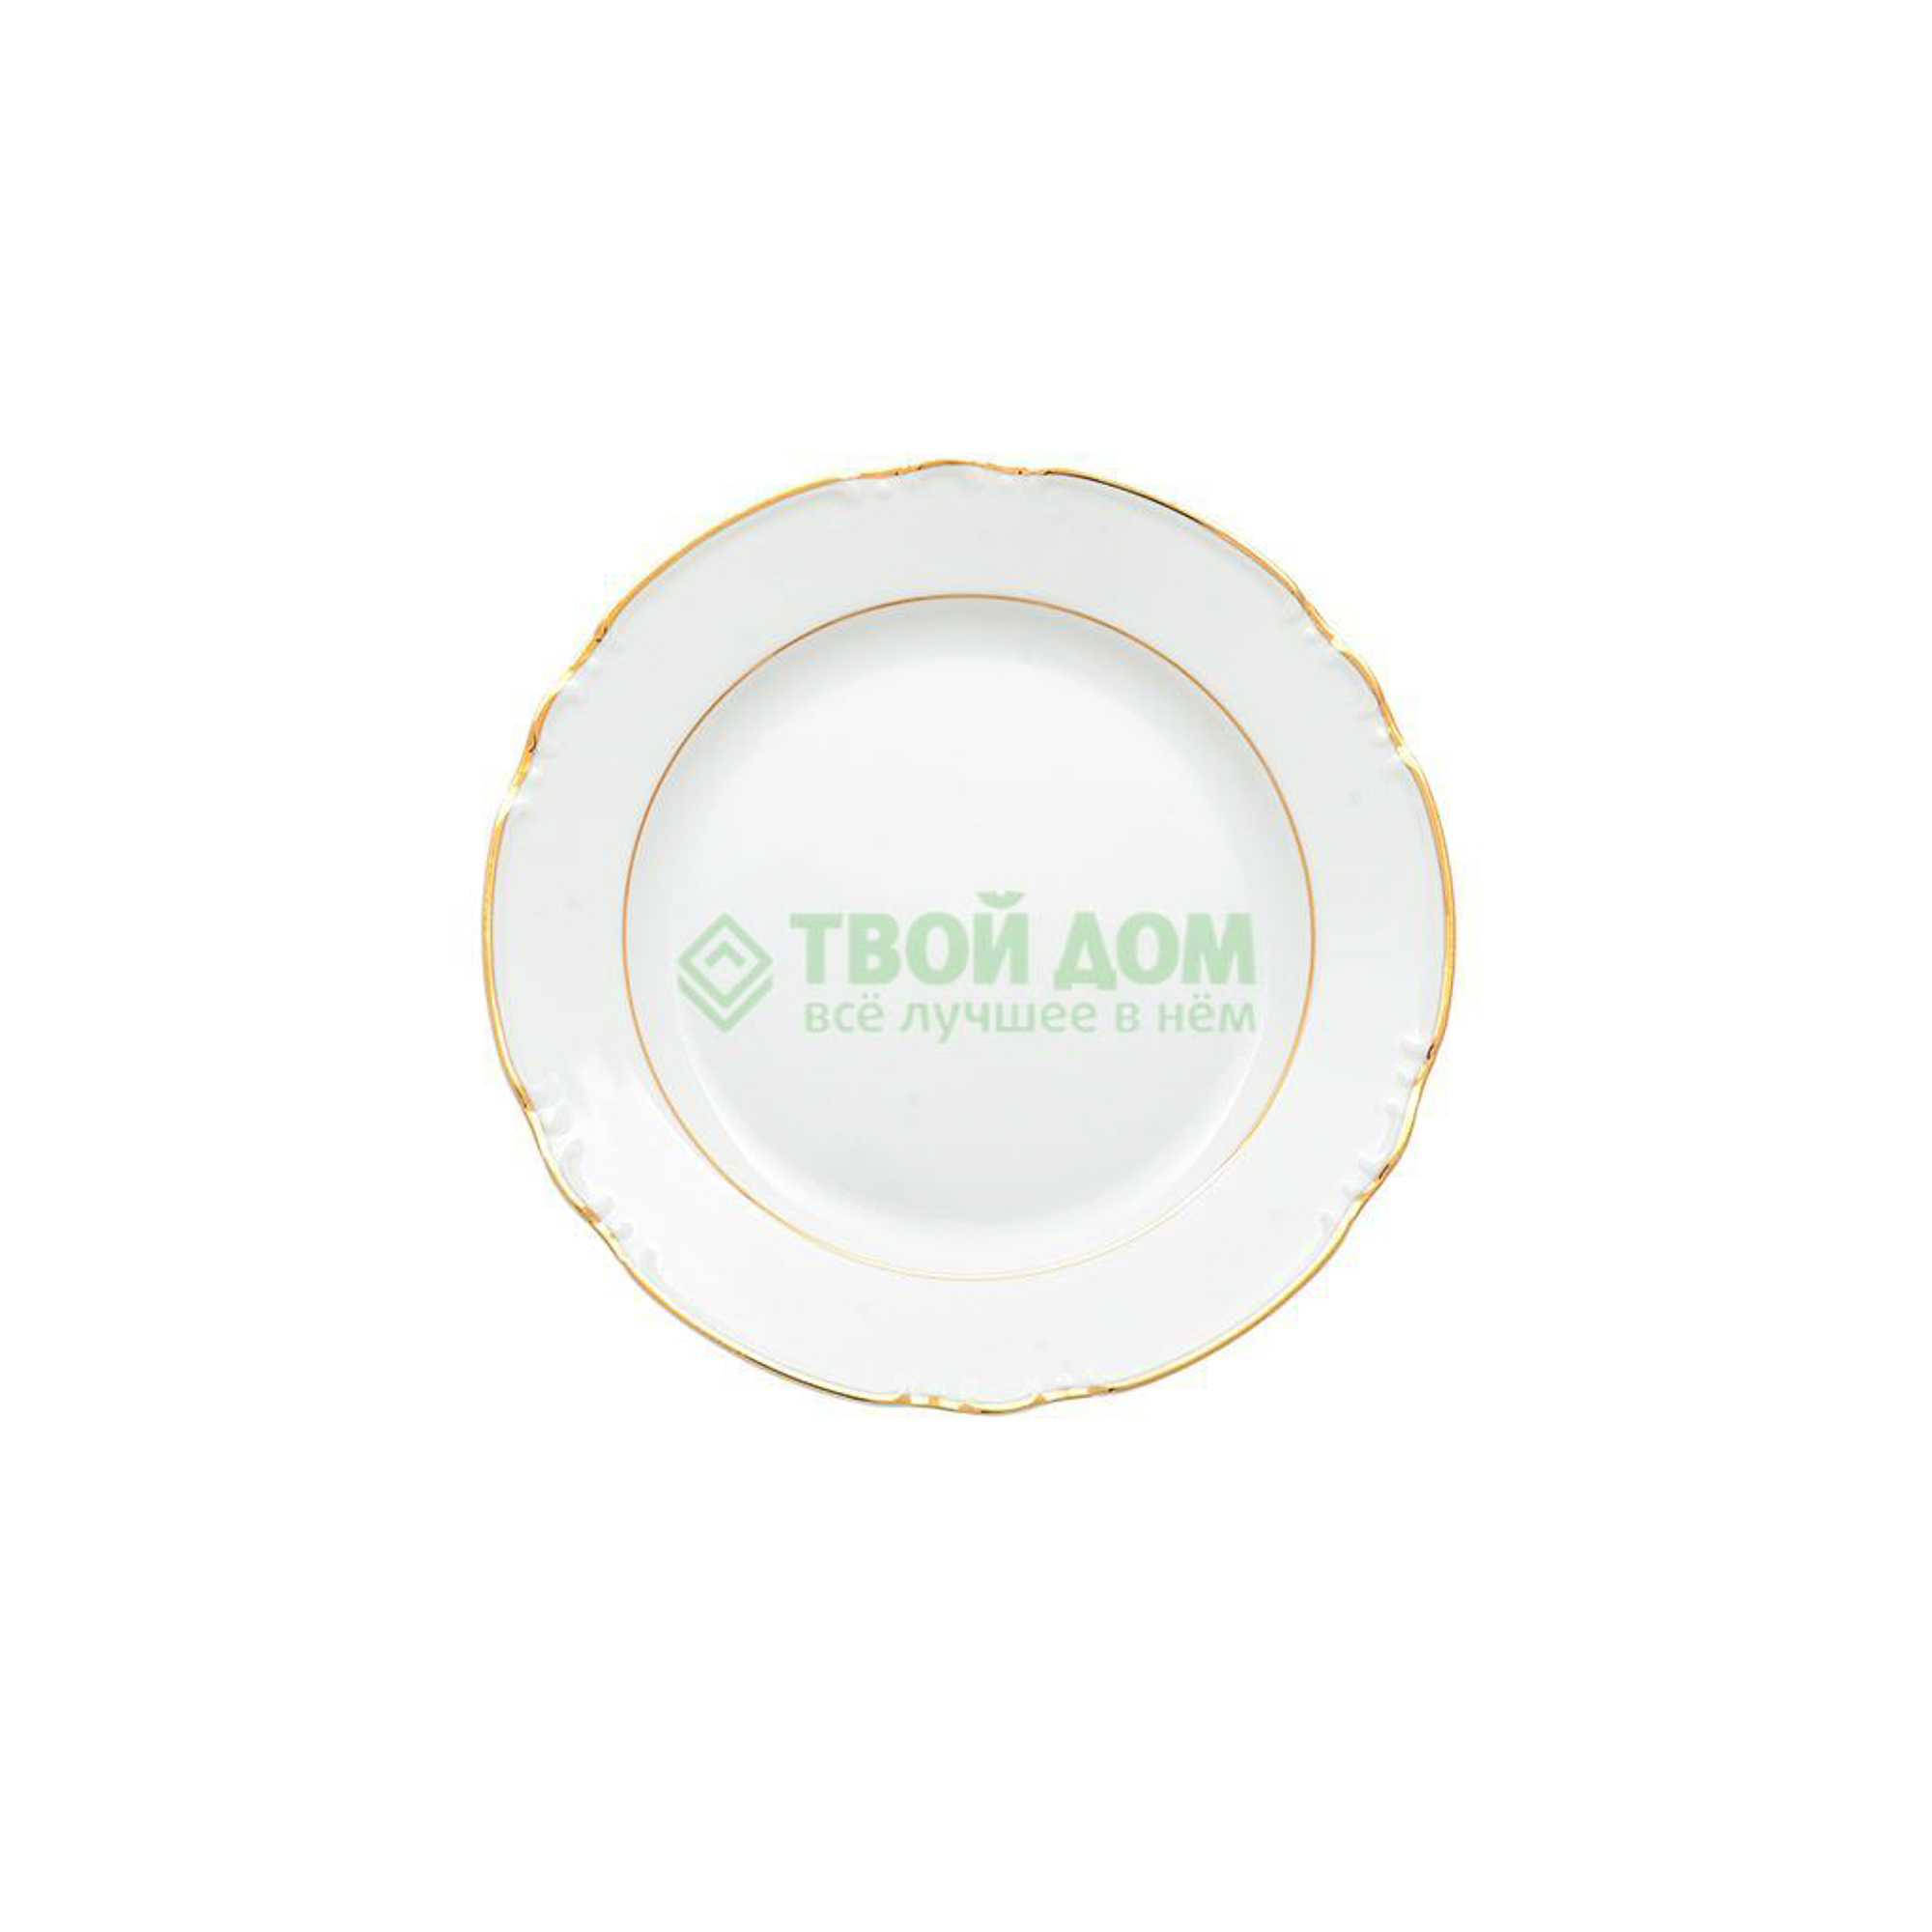 Тарелка Thun Констанция отводка золото 24 см тарелка ivv folies круглая 28 см желтое золото